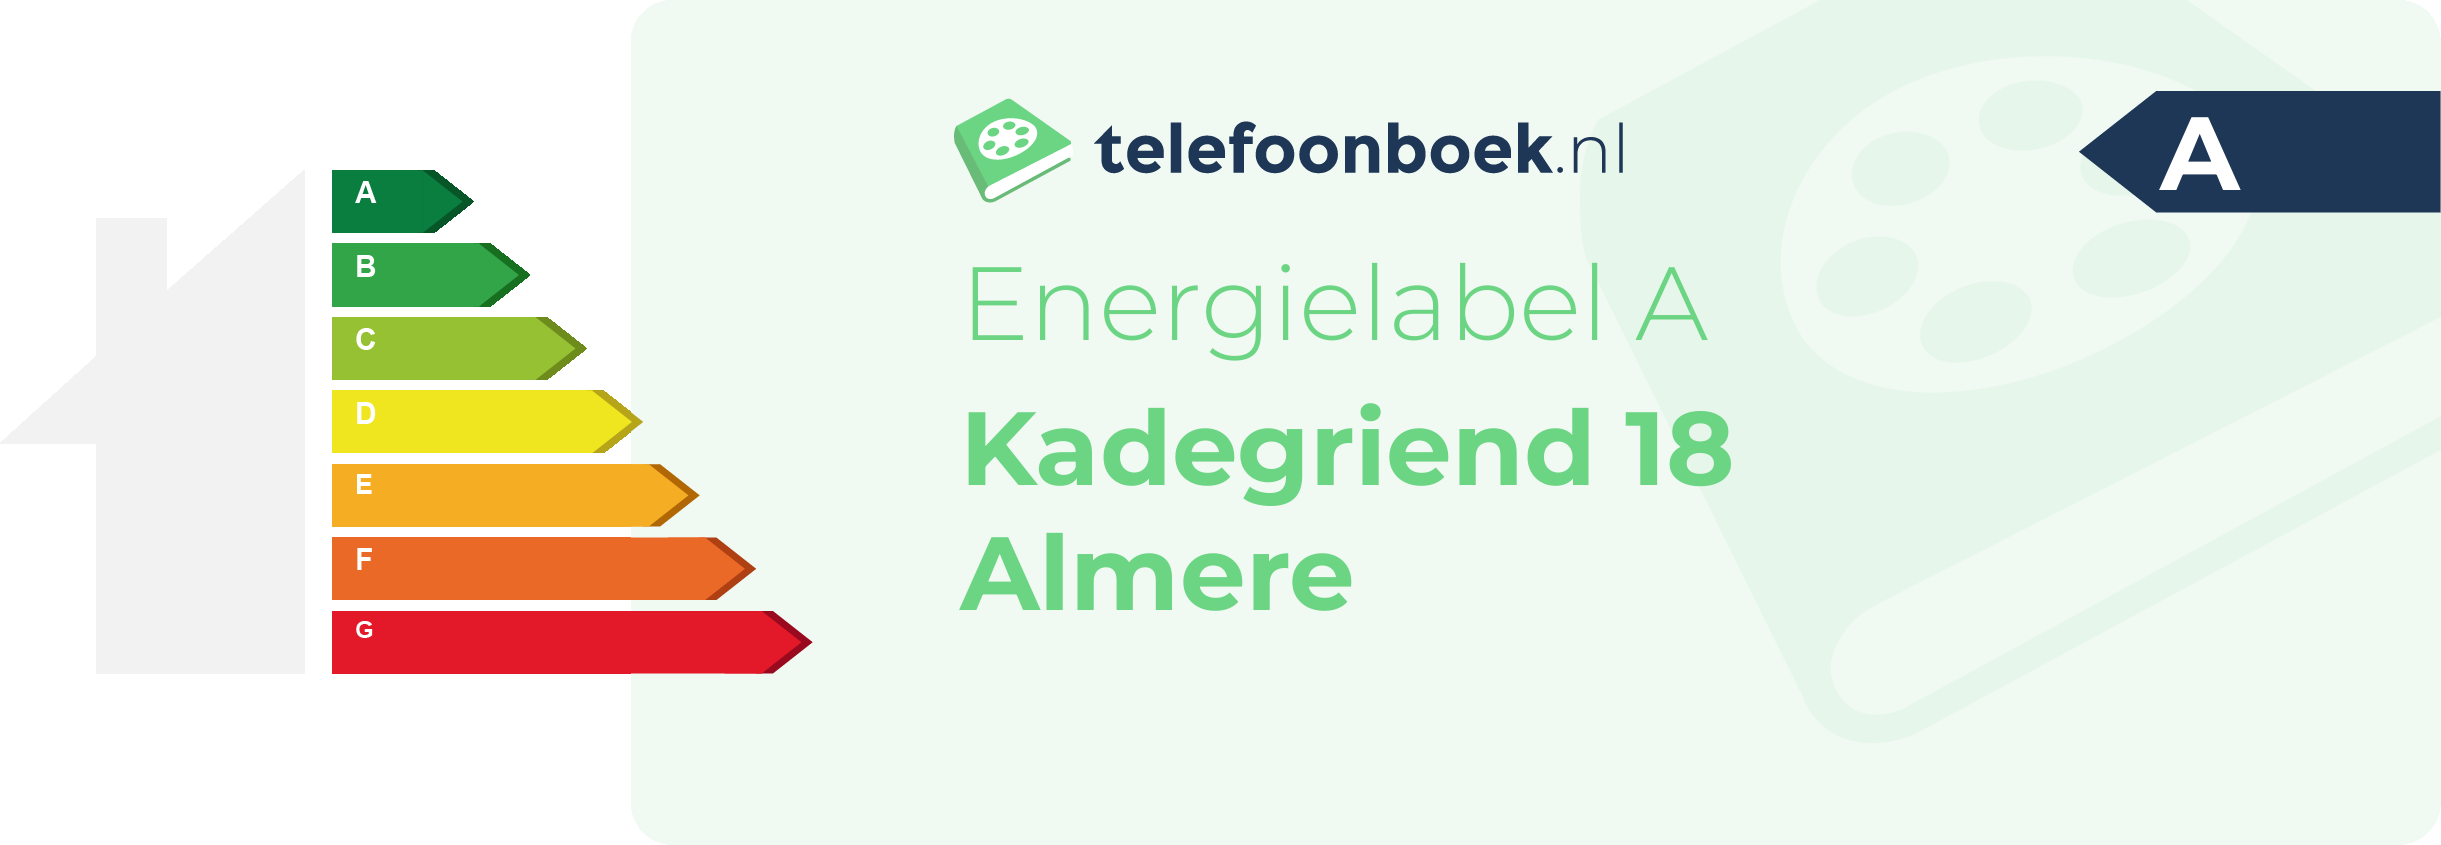 Energielabel Kadegriend 18 Almere